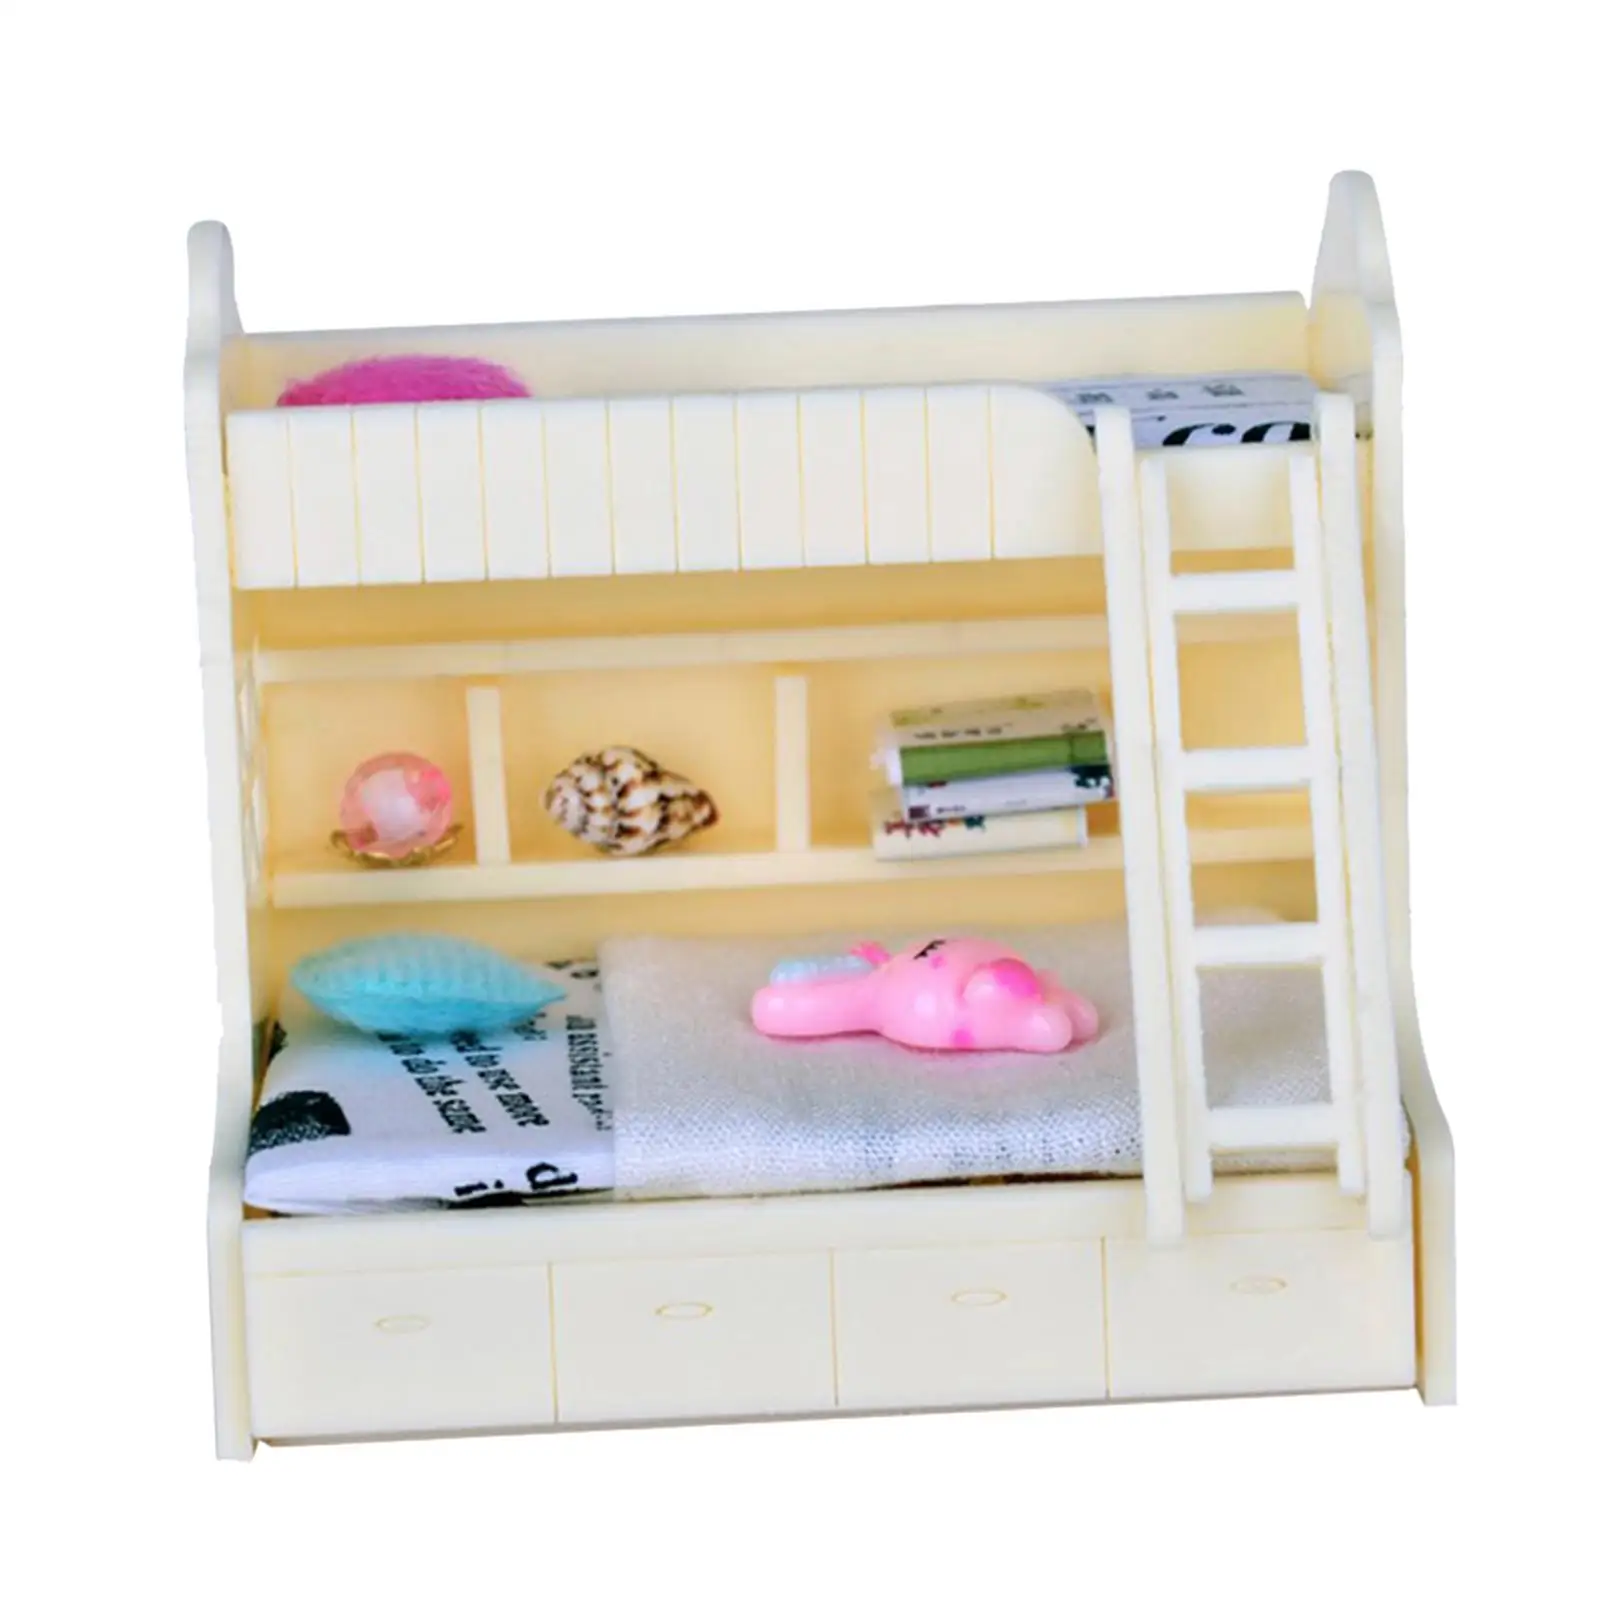  Miniature Bunk Bed Model /12 Dollhouse Kids Bedroom Furniture